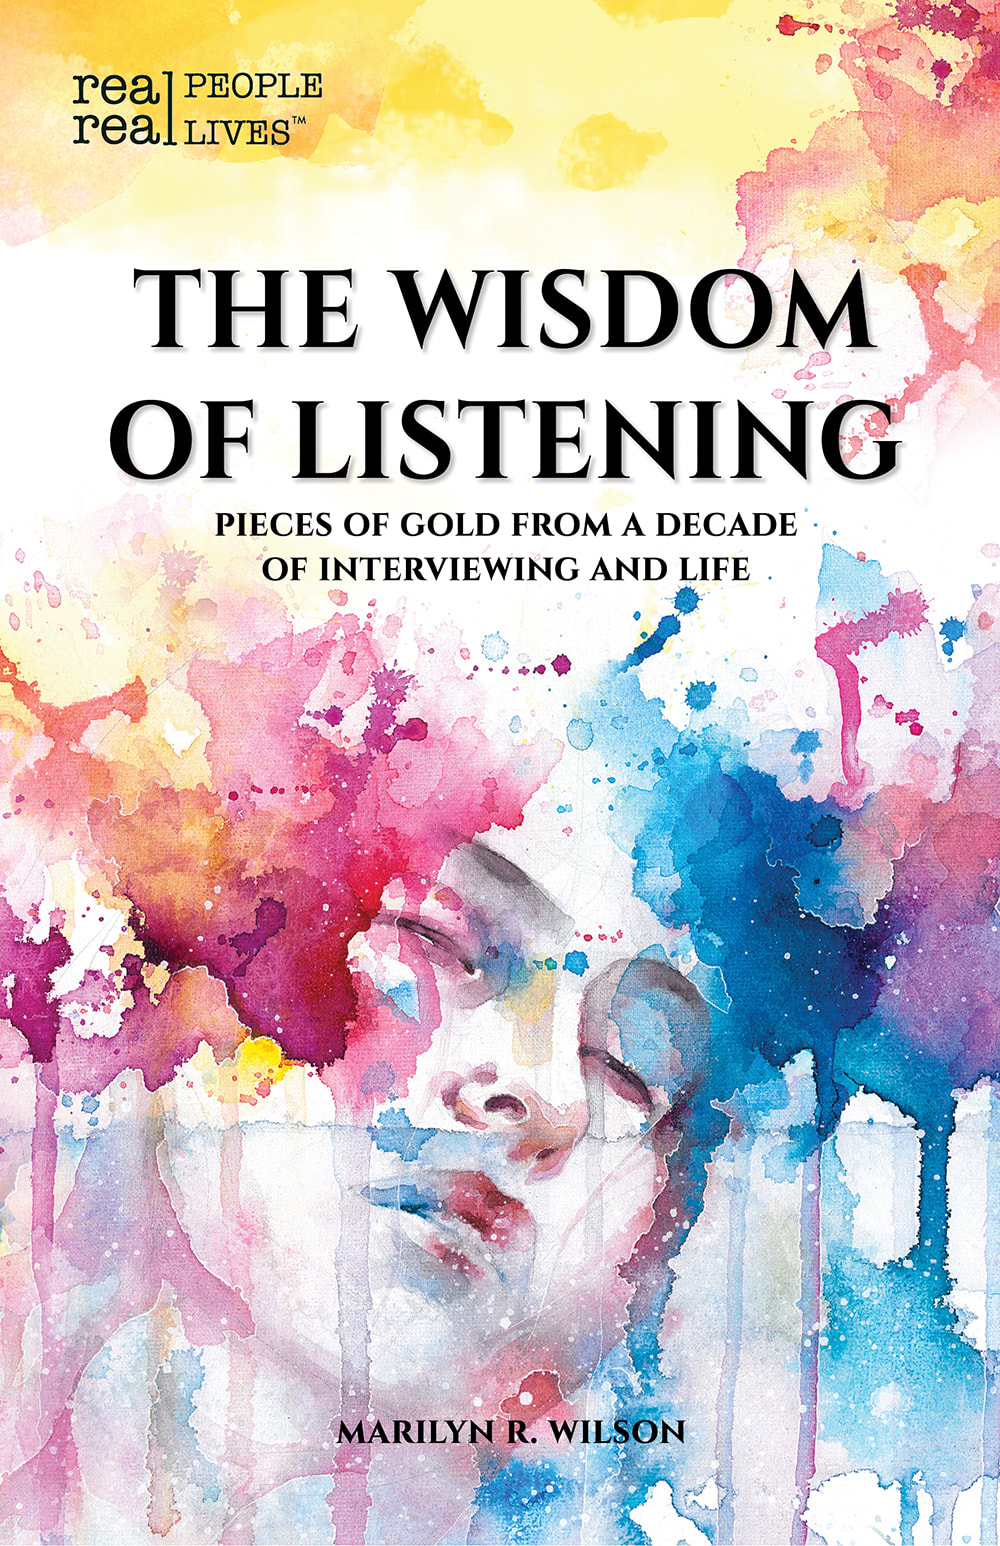 The Wisdom of Listening by Marilyn R. Wilson